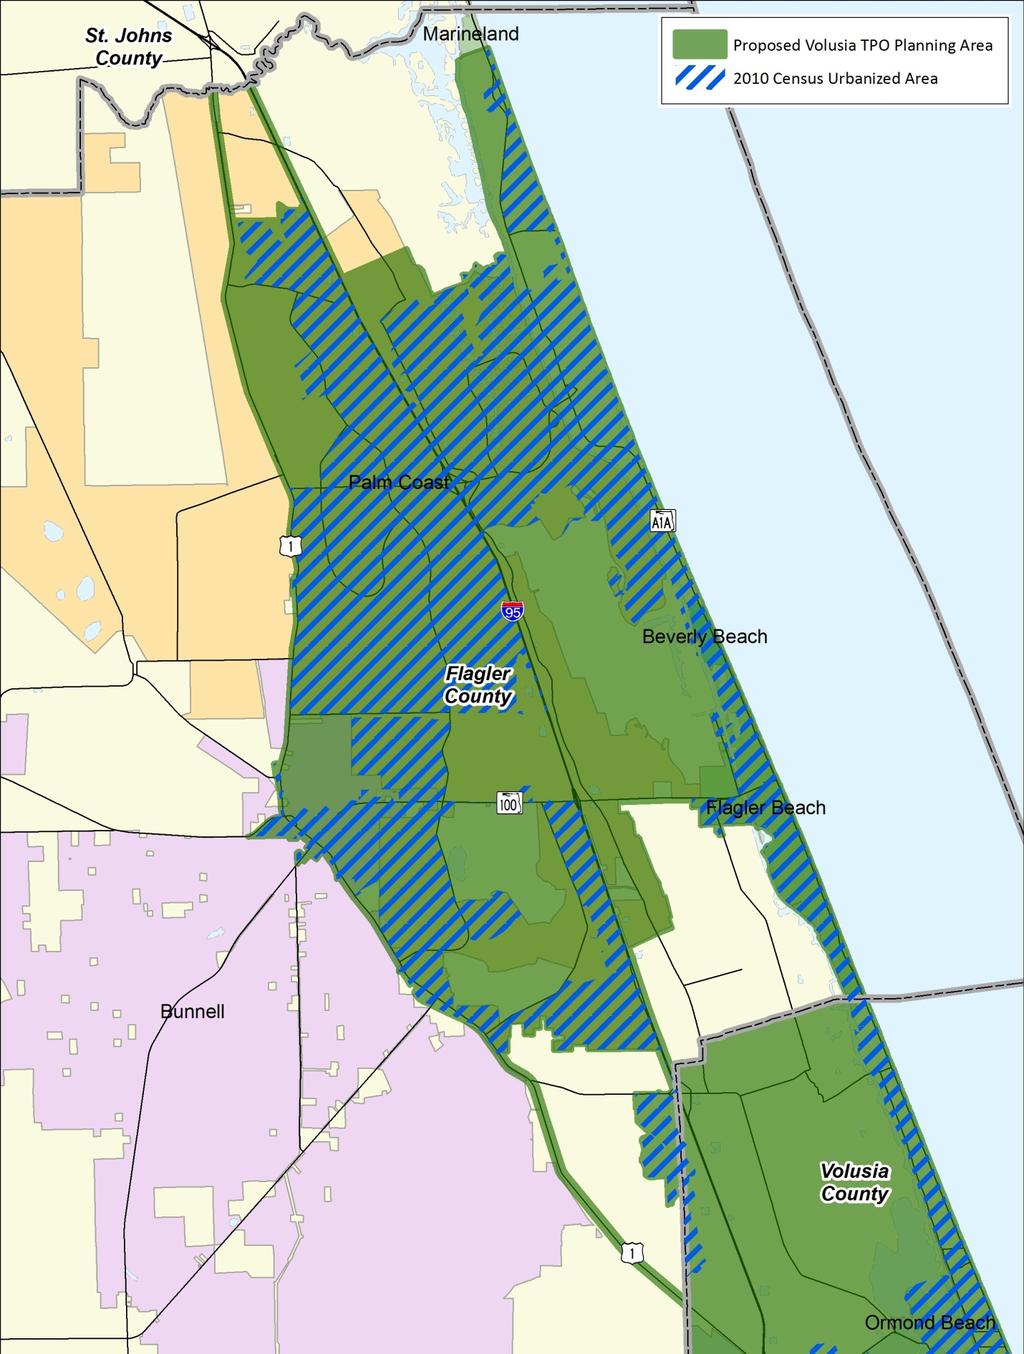 Figure 4 - Proposed VTPO Planning Area (Flagler County